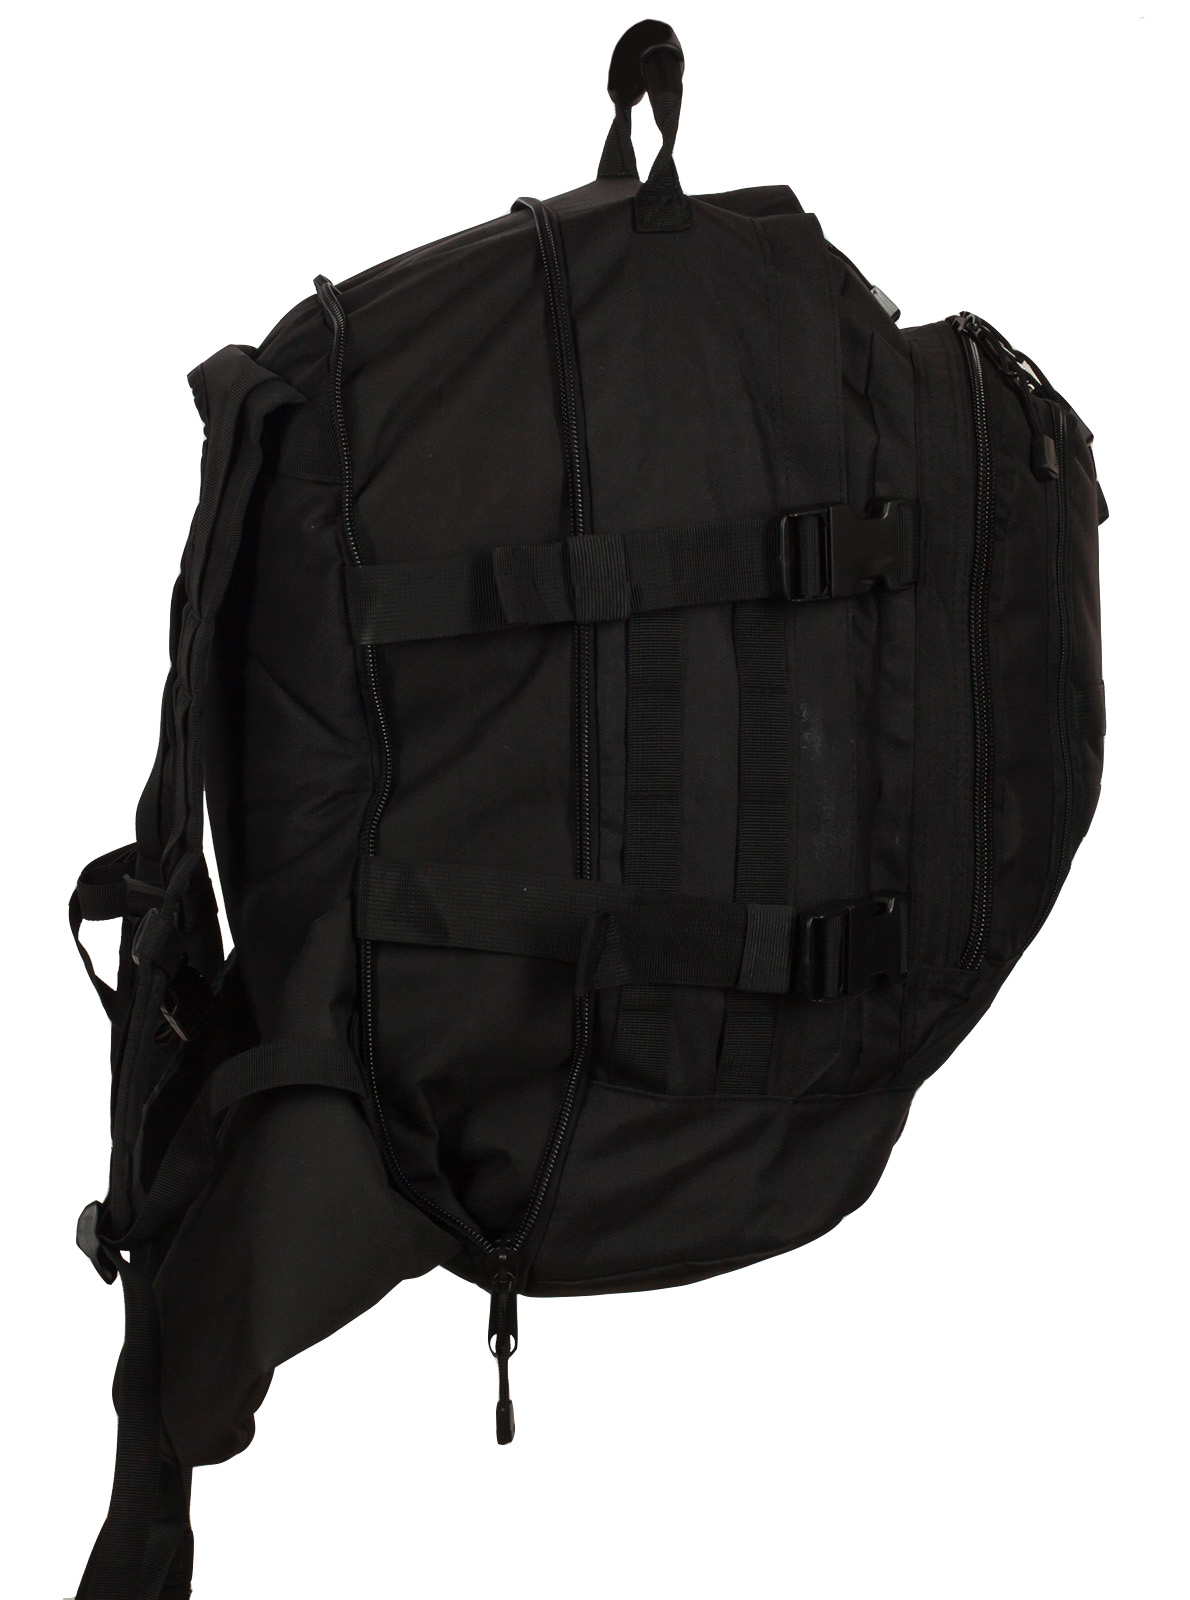 Вся МОЩЬ Морской пехоты – патрульный ранец 3-Day Expandable Backpack 08002A. 